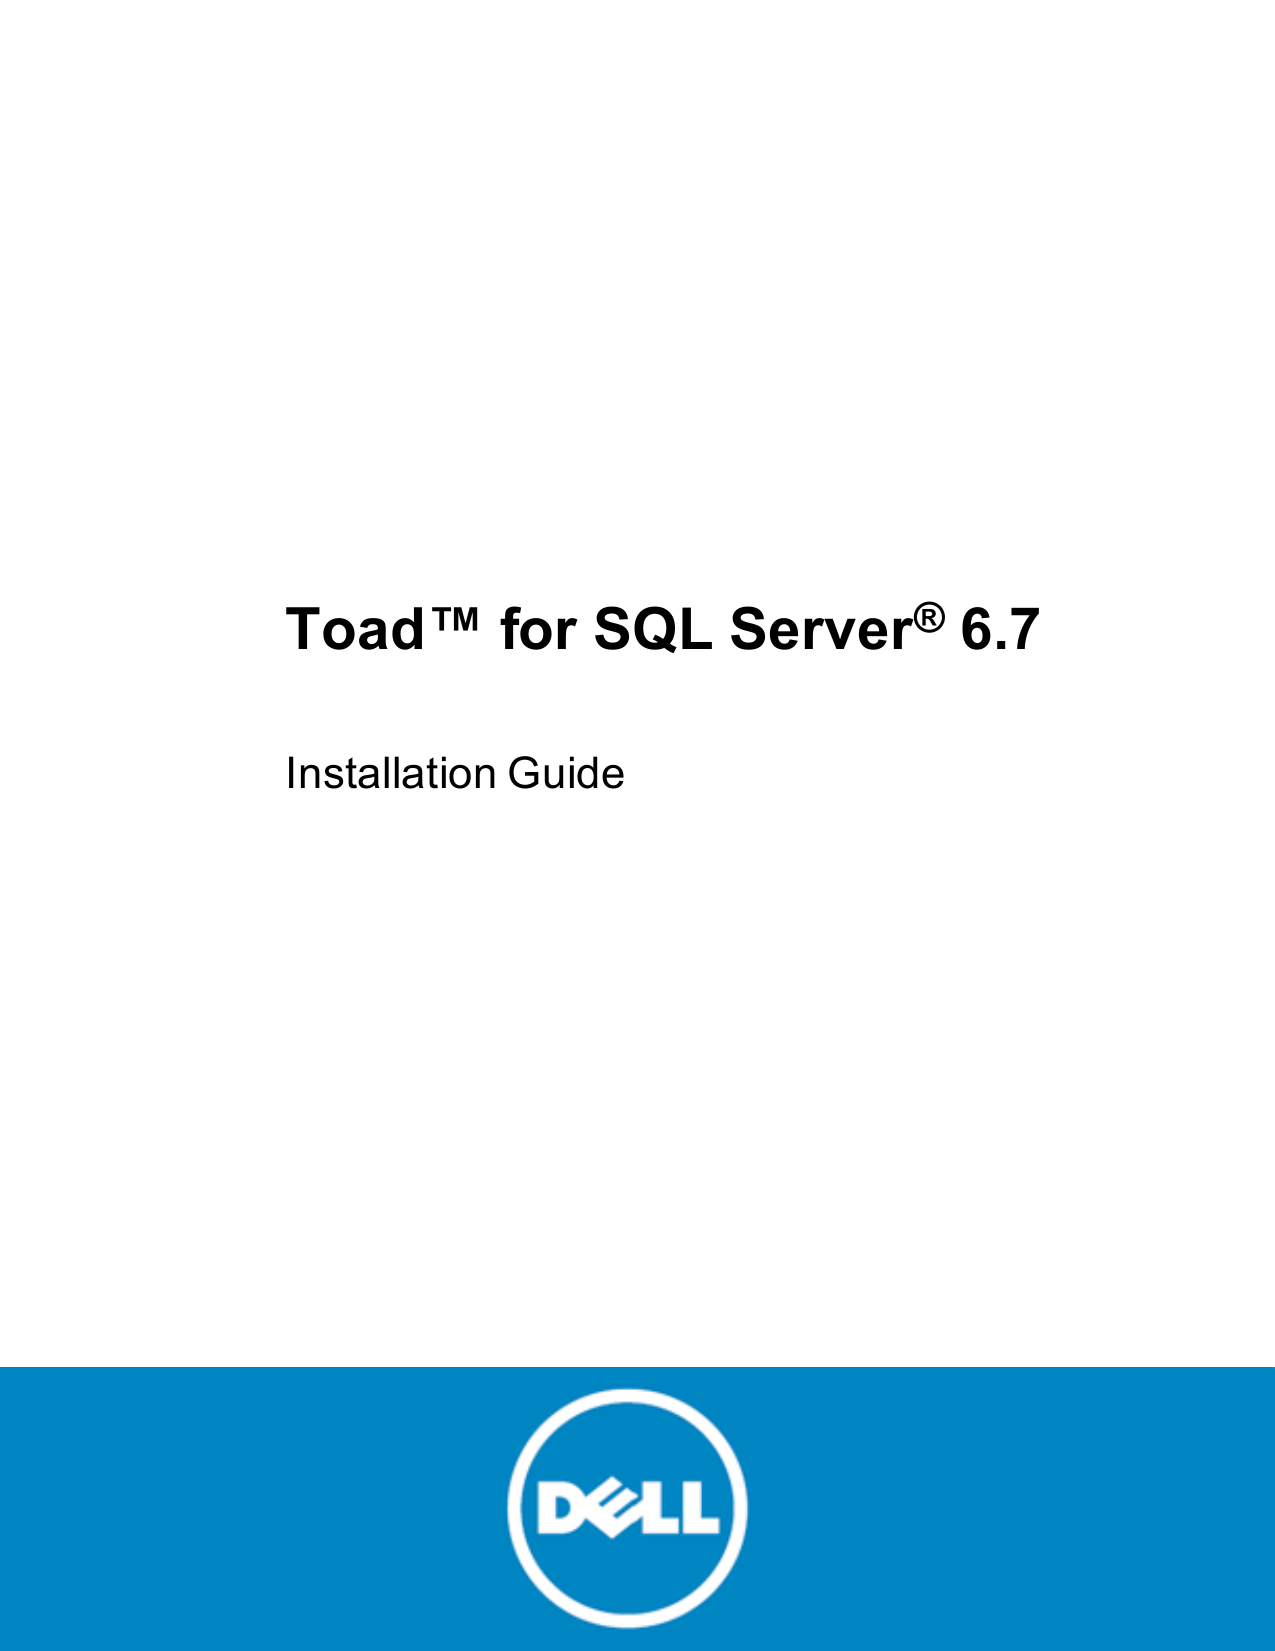 toad for sql server development suite